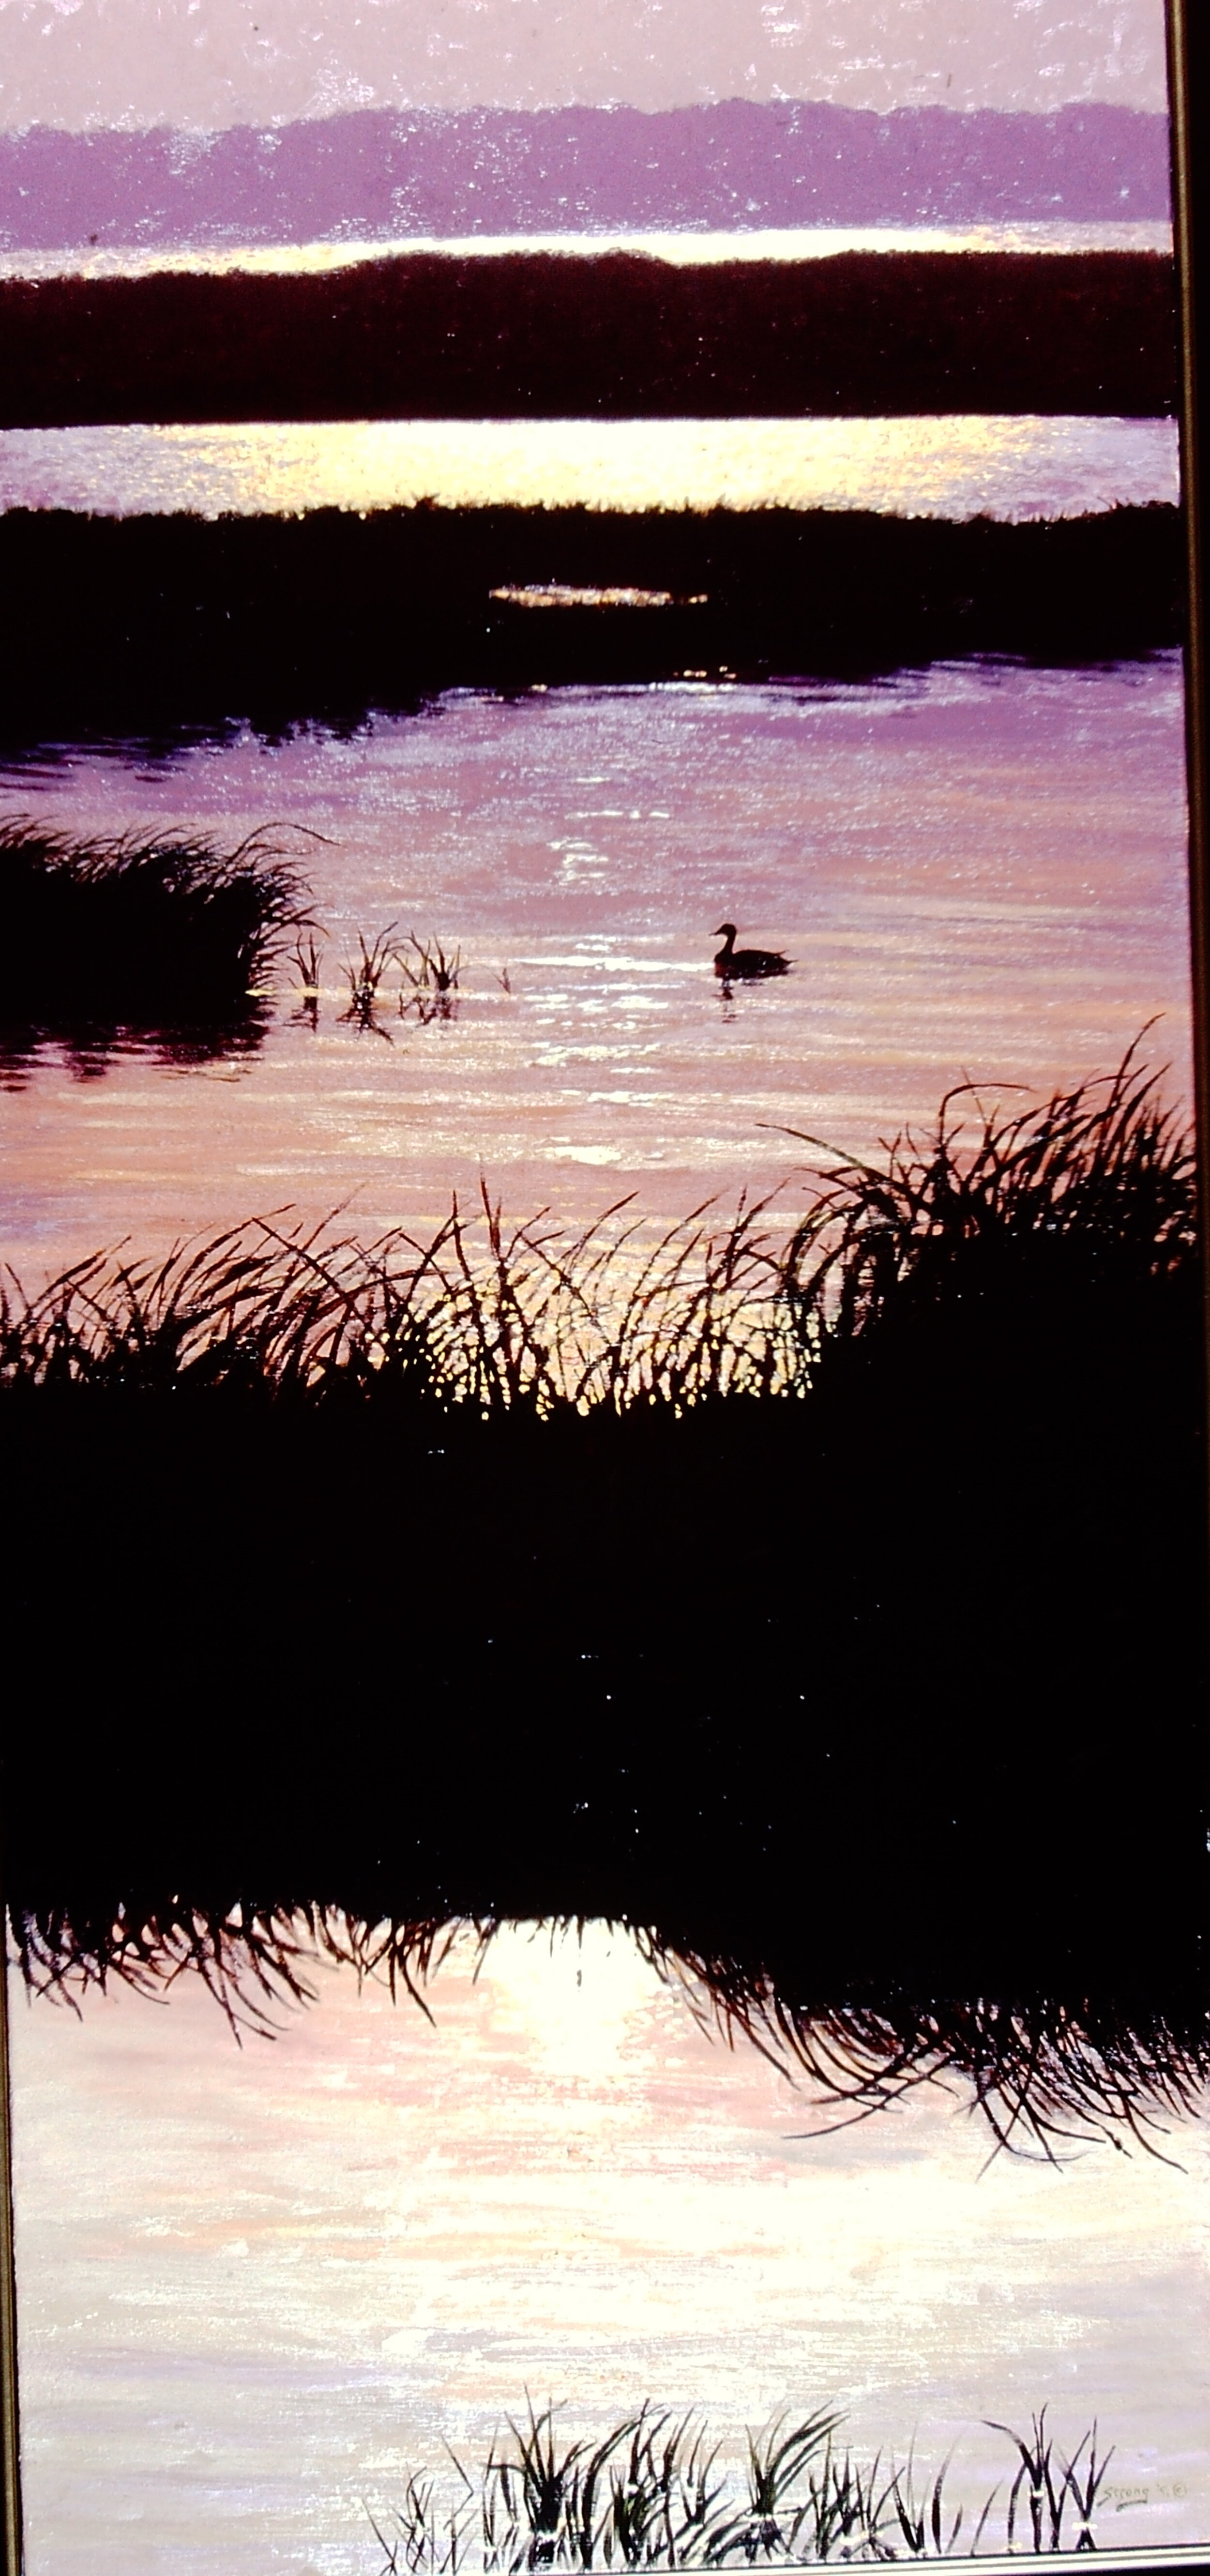 Sunset Duck